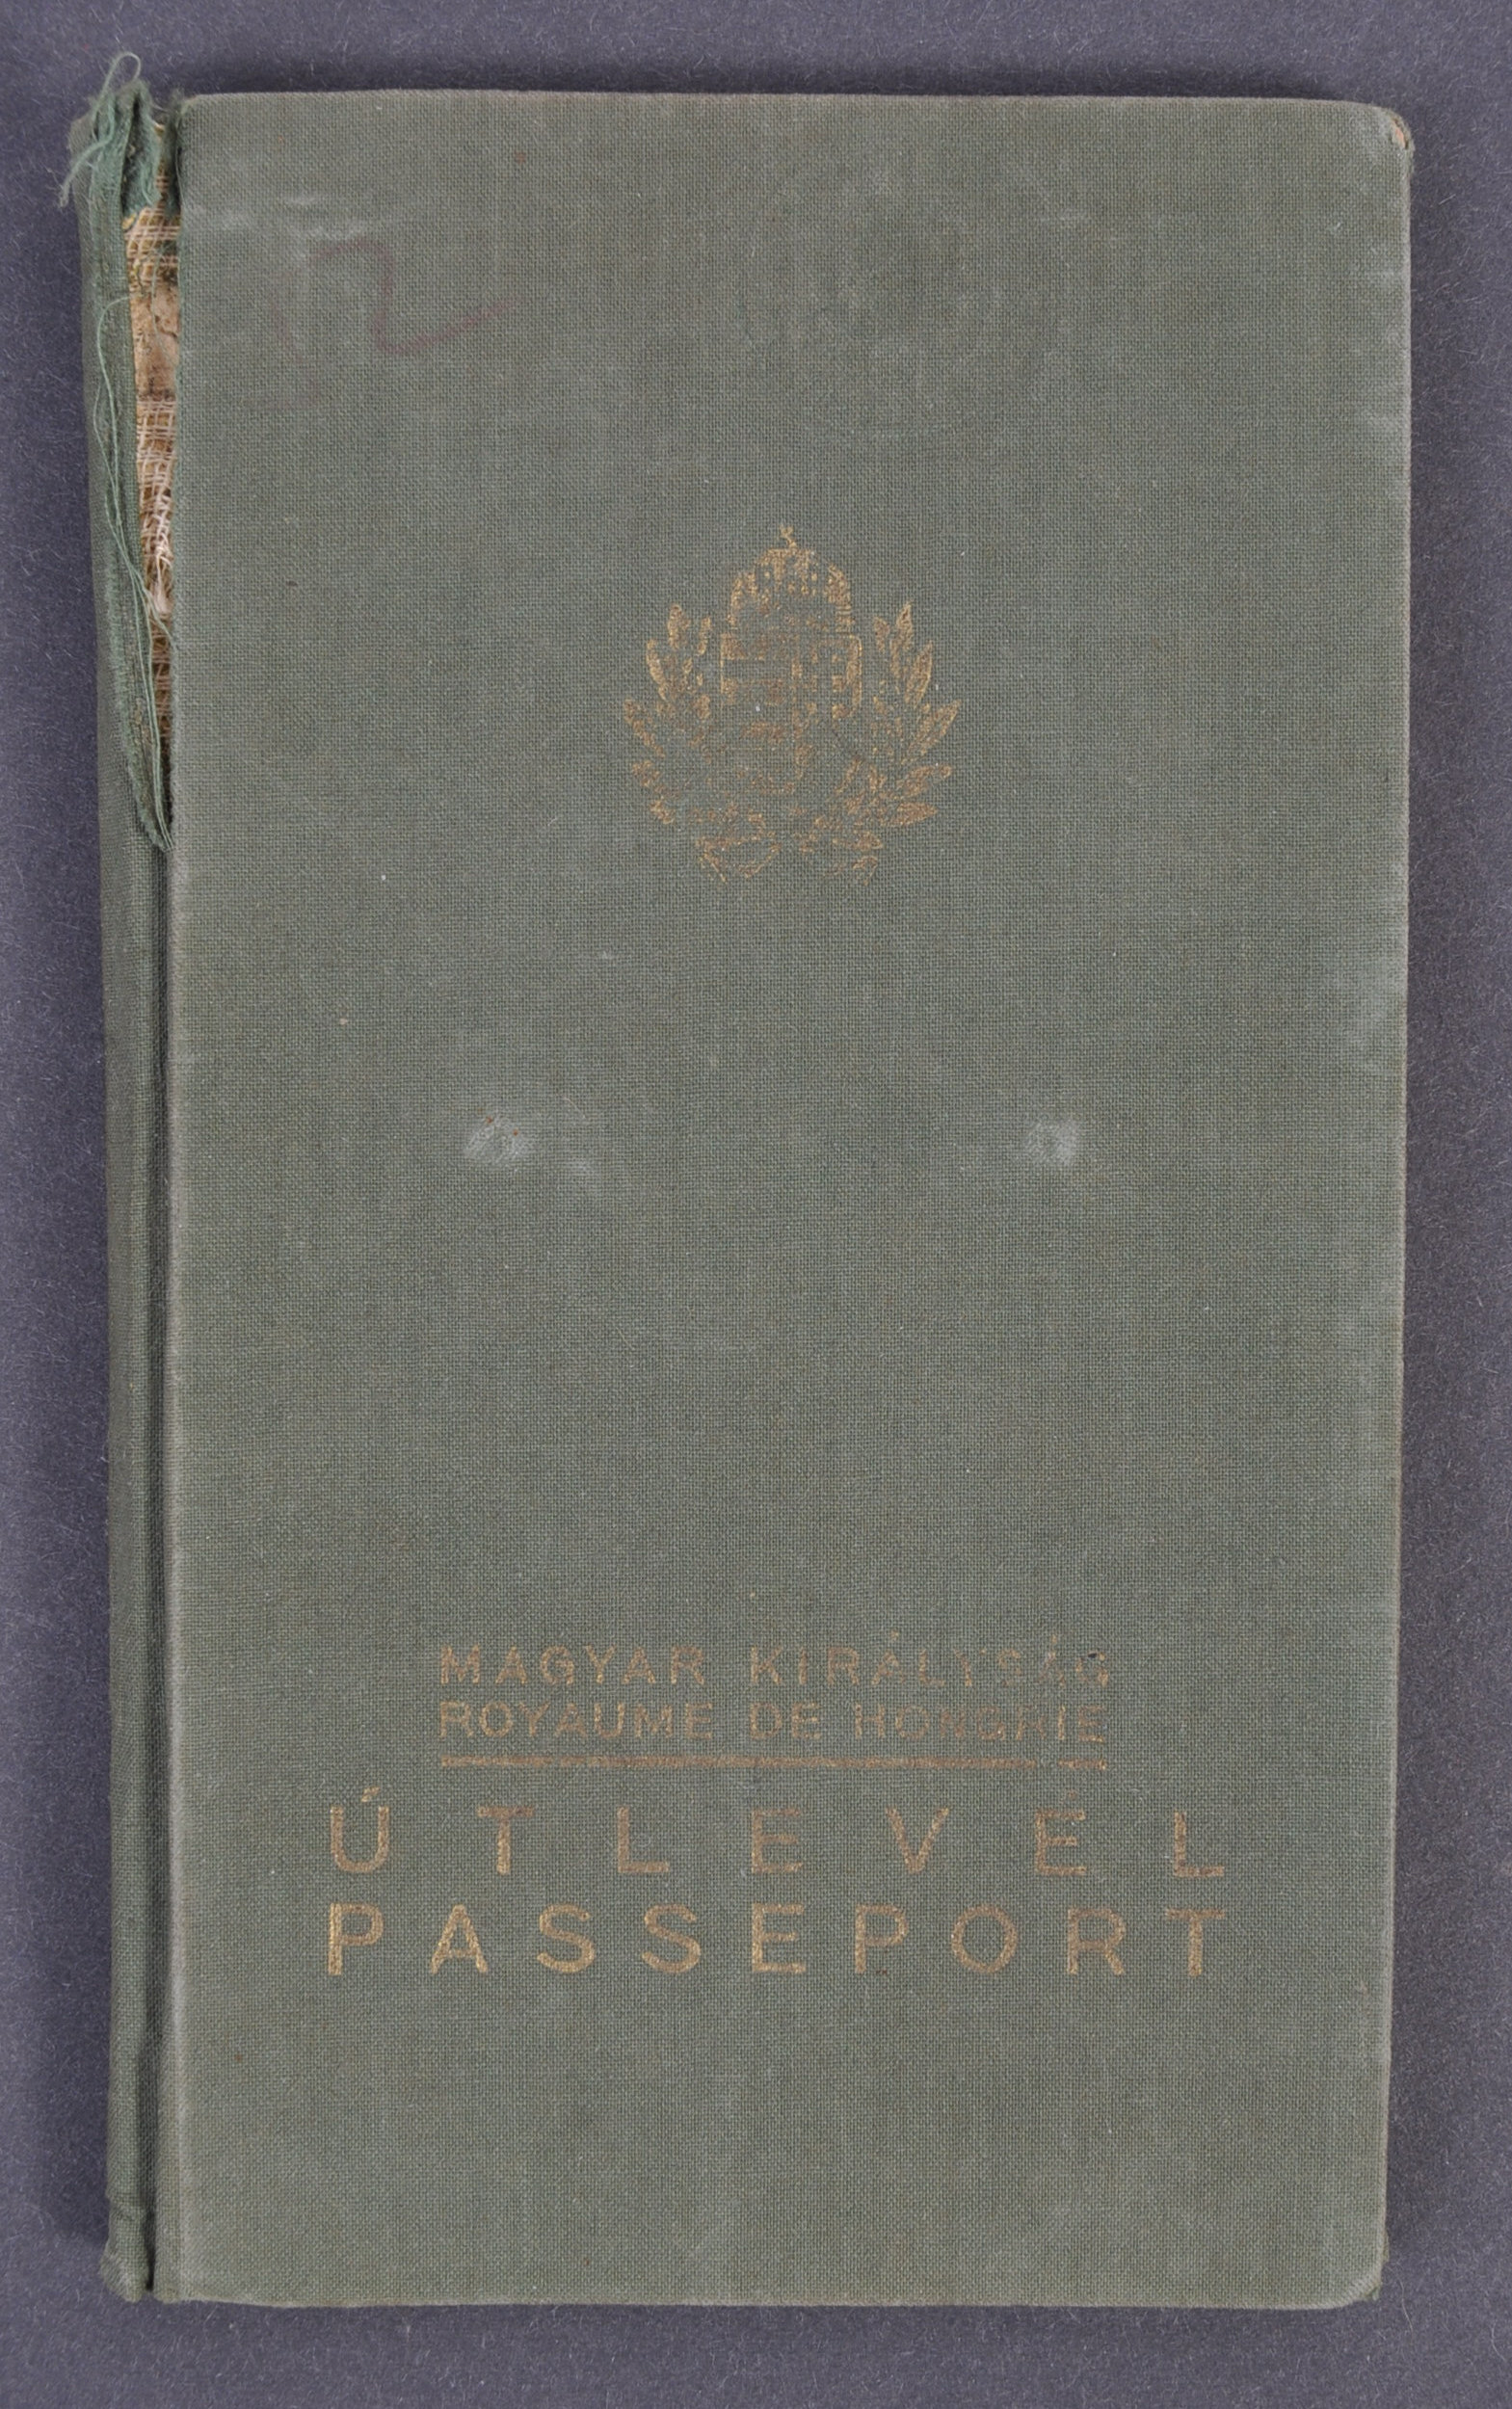 RARE ORIGINAL WWII ERA KINGDOM OF HUNGARY STUDENT PASSPORT